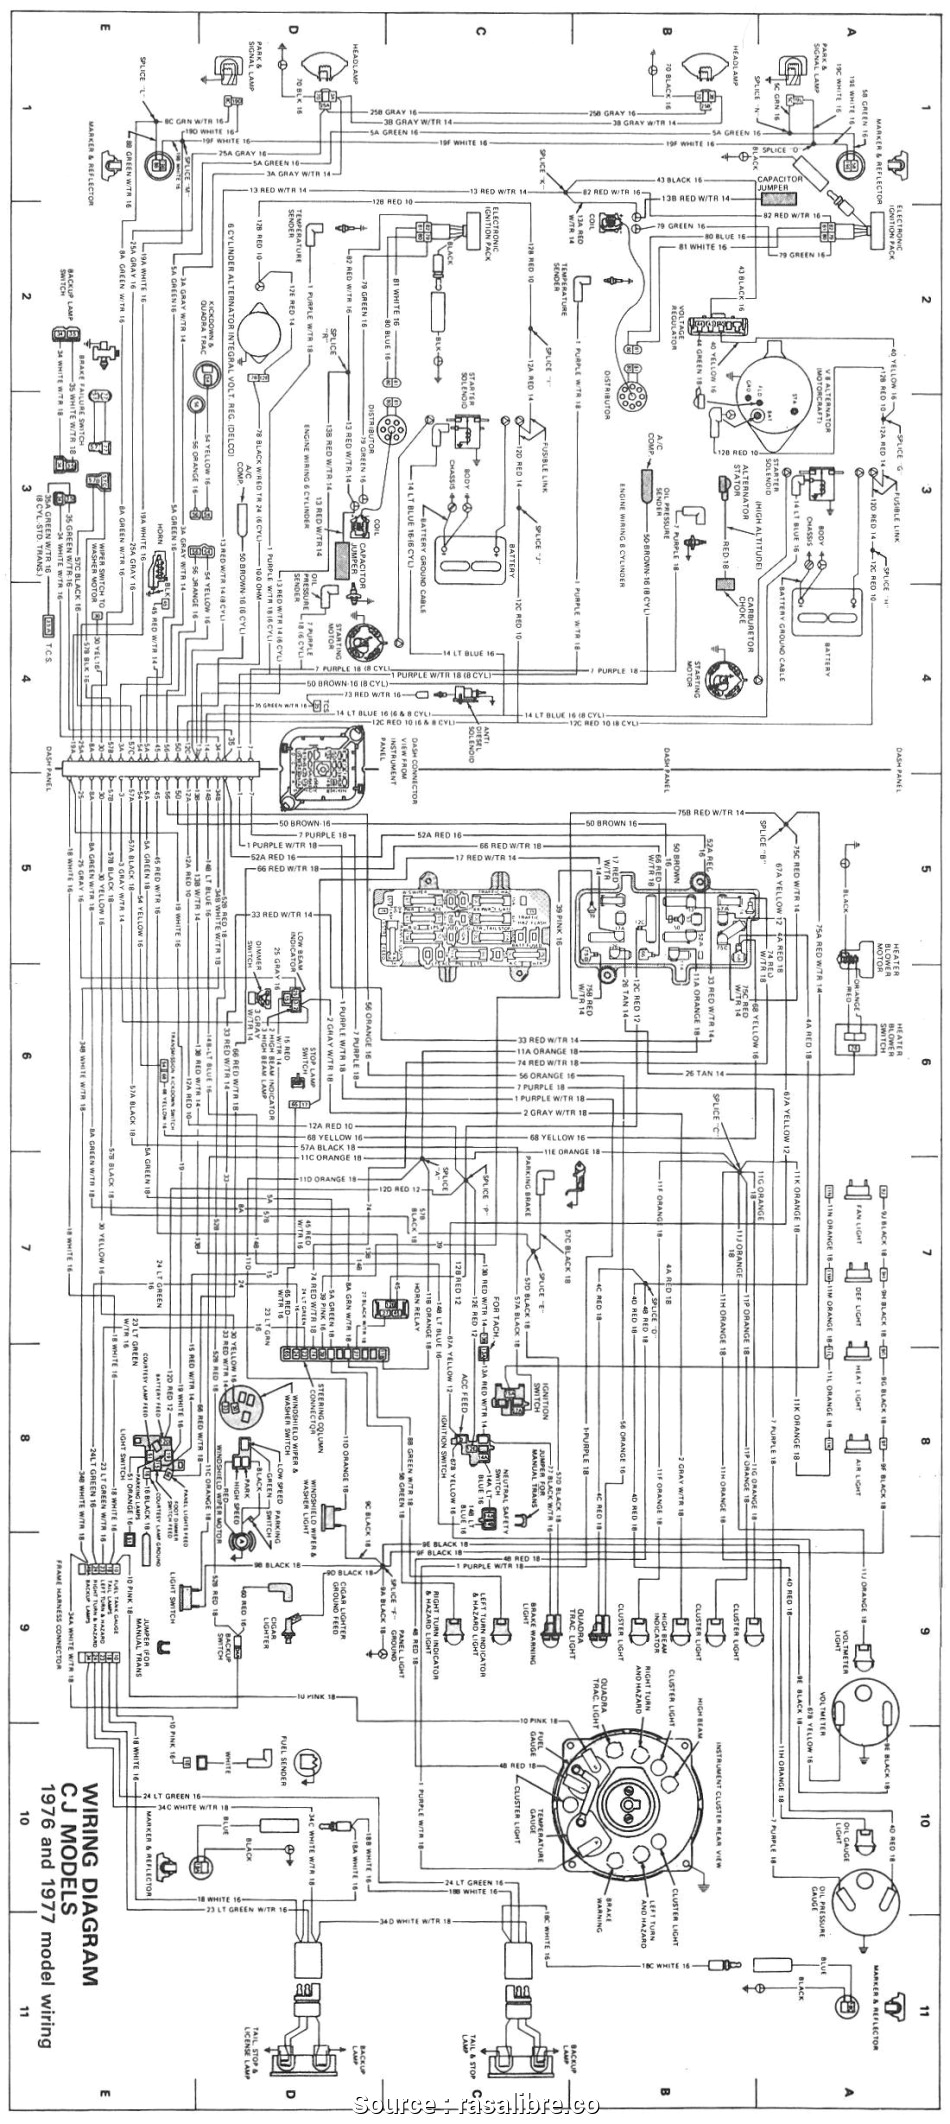 cj5 wiring harness complete kit wiring diagram new 79 trans am ac wiring diagram 79 trans am wiring diagram